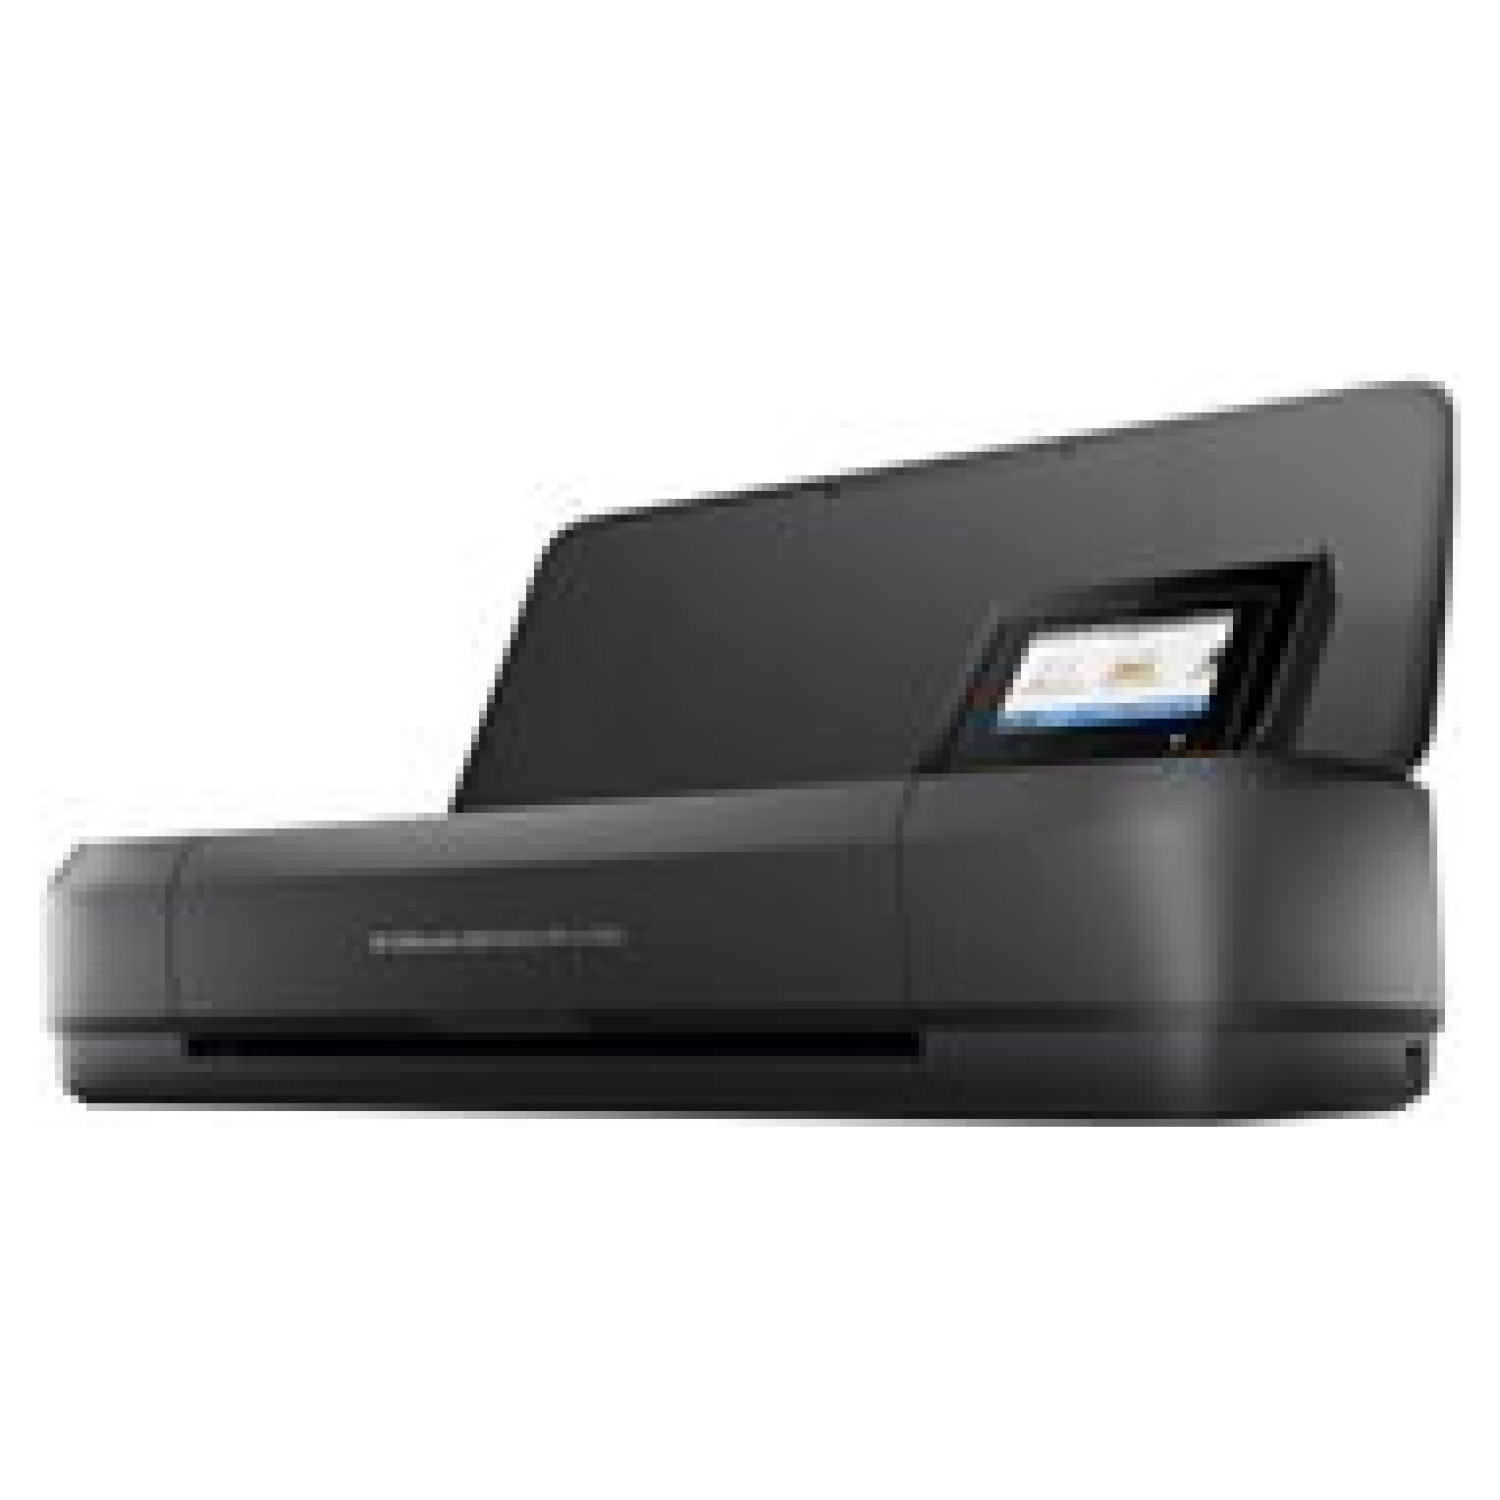 HP OfficeJet MFP 250 Mobile AIO Printer